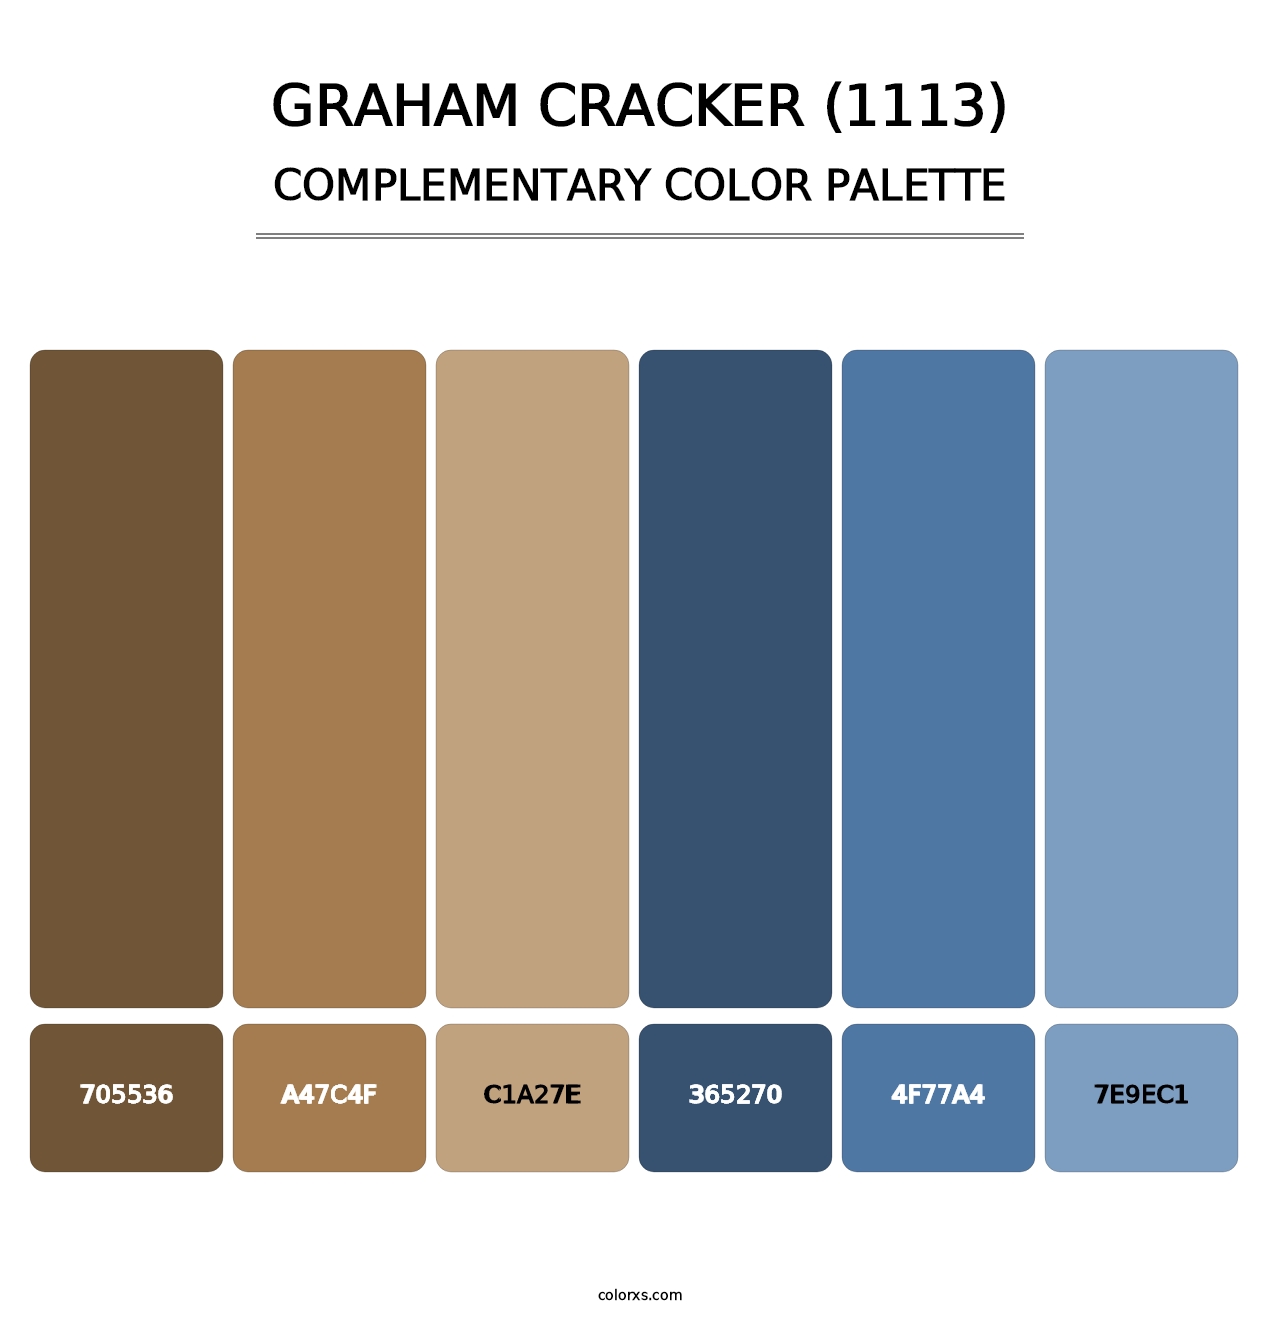 Graham Cracker (1113) - Complementary Color Palette